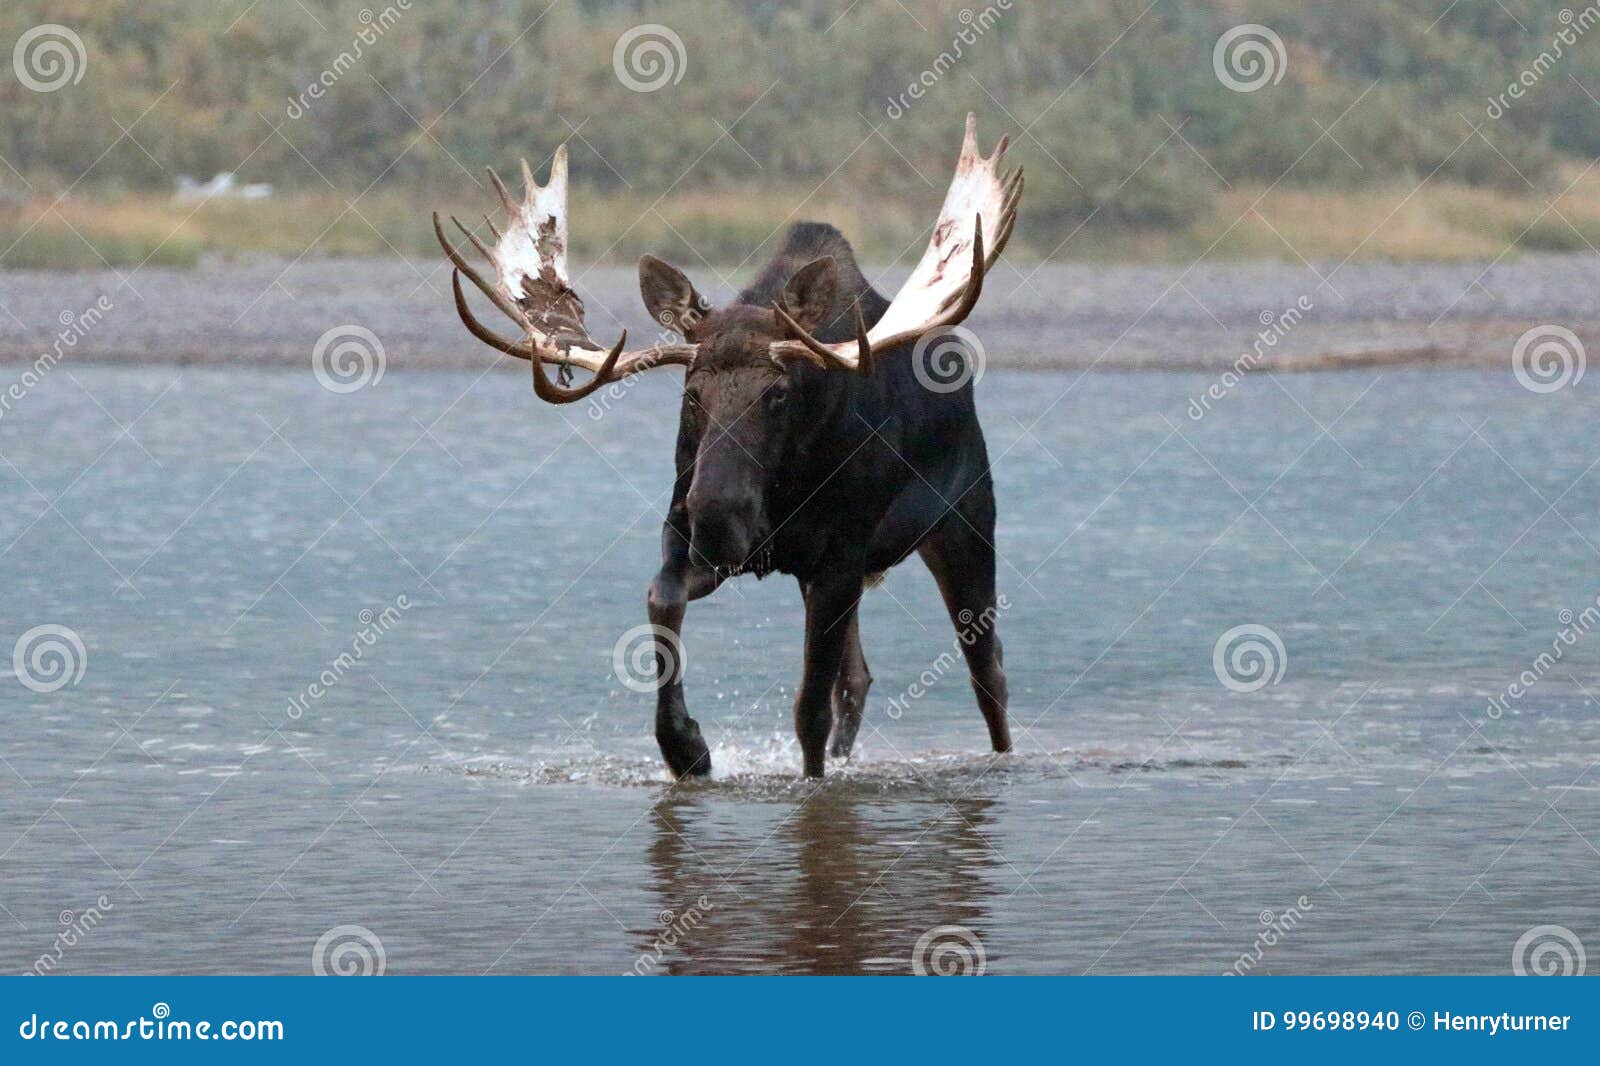 adult shiras bull moose walking near shore of fishercap lake in the many glacier region of glacier national park in montana usa